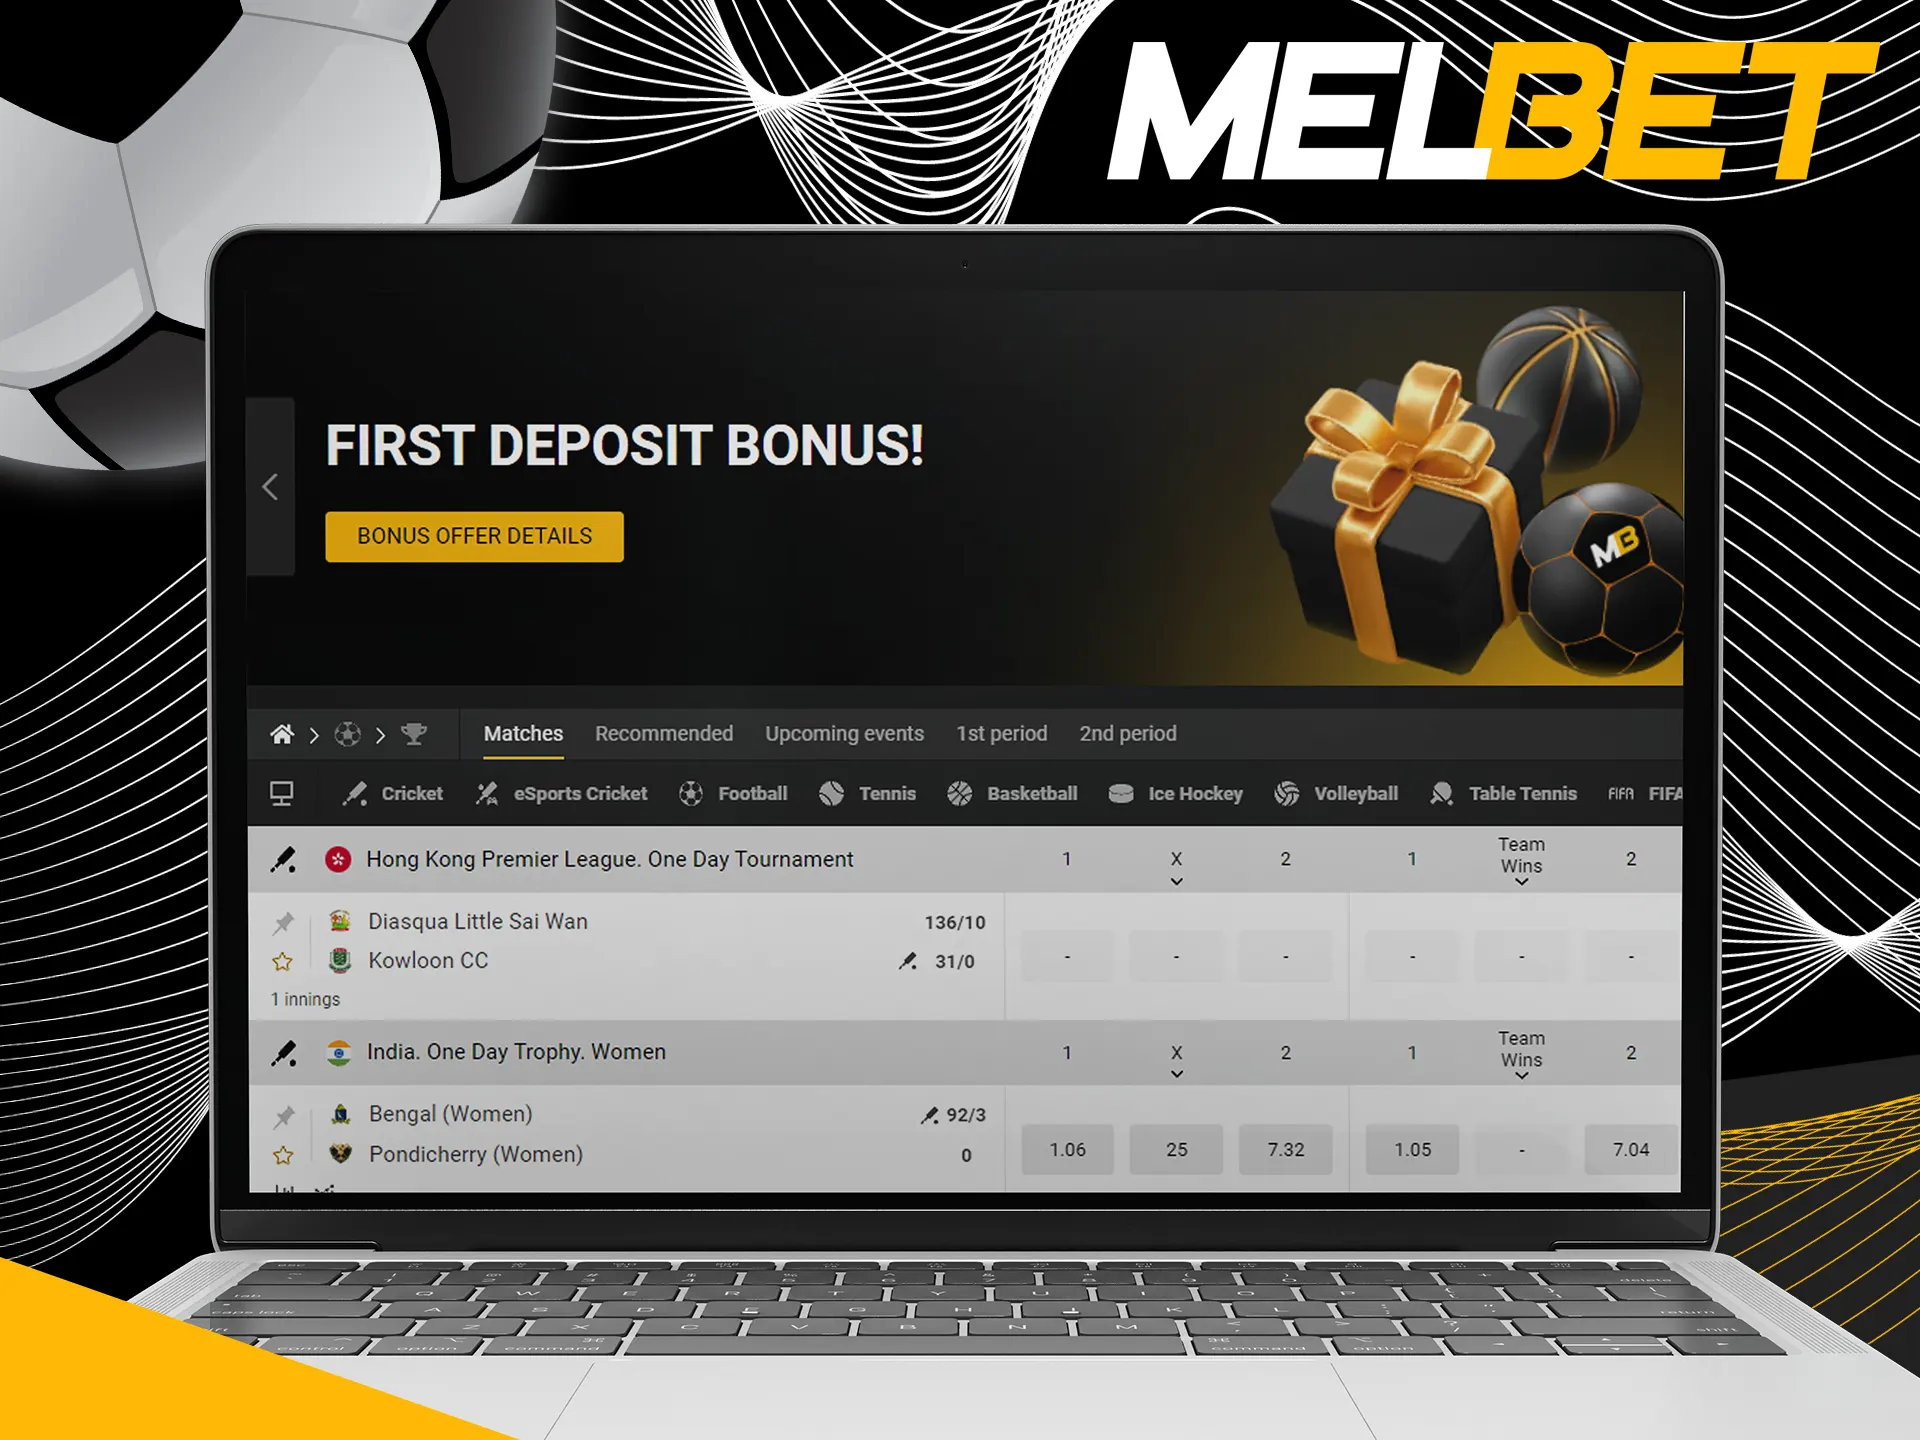 Get your Melbet sports bonus after first deposit.